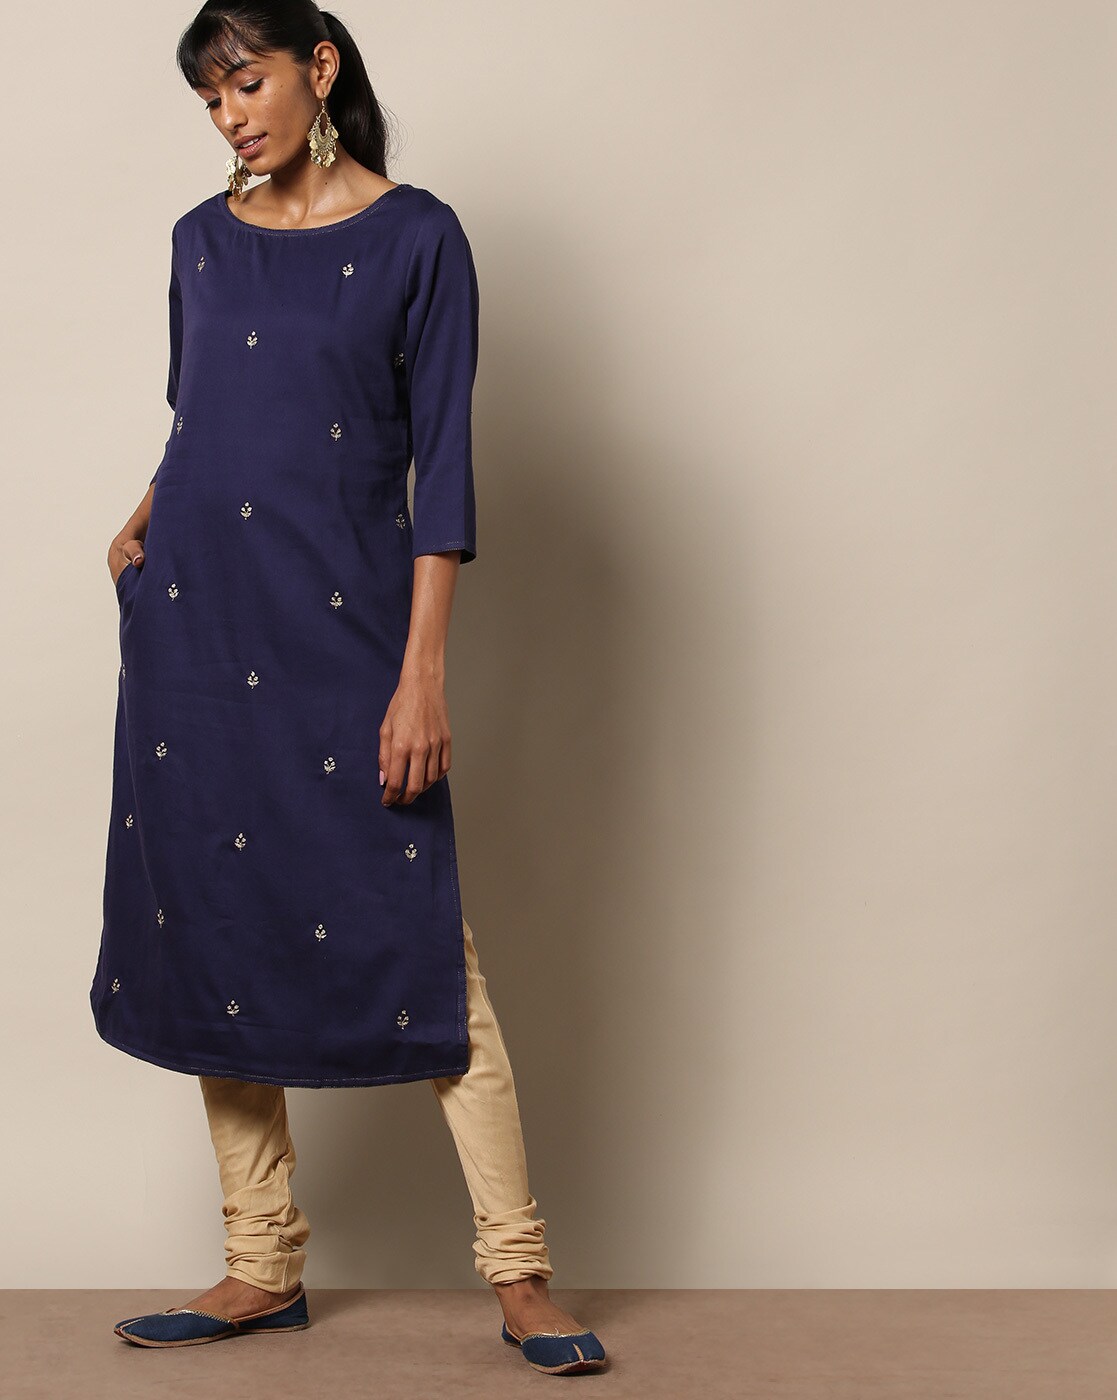 Plus Size Women Blue Kurta Print Ethnic Pakistani Kurti Top Cotton Dress  -8XL | eBay